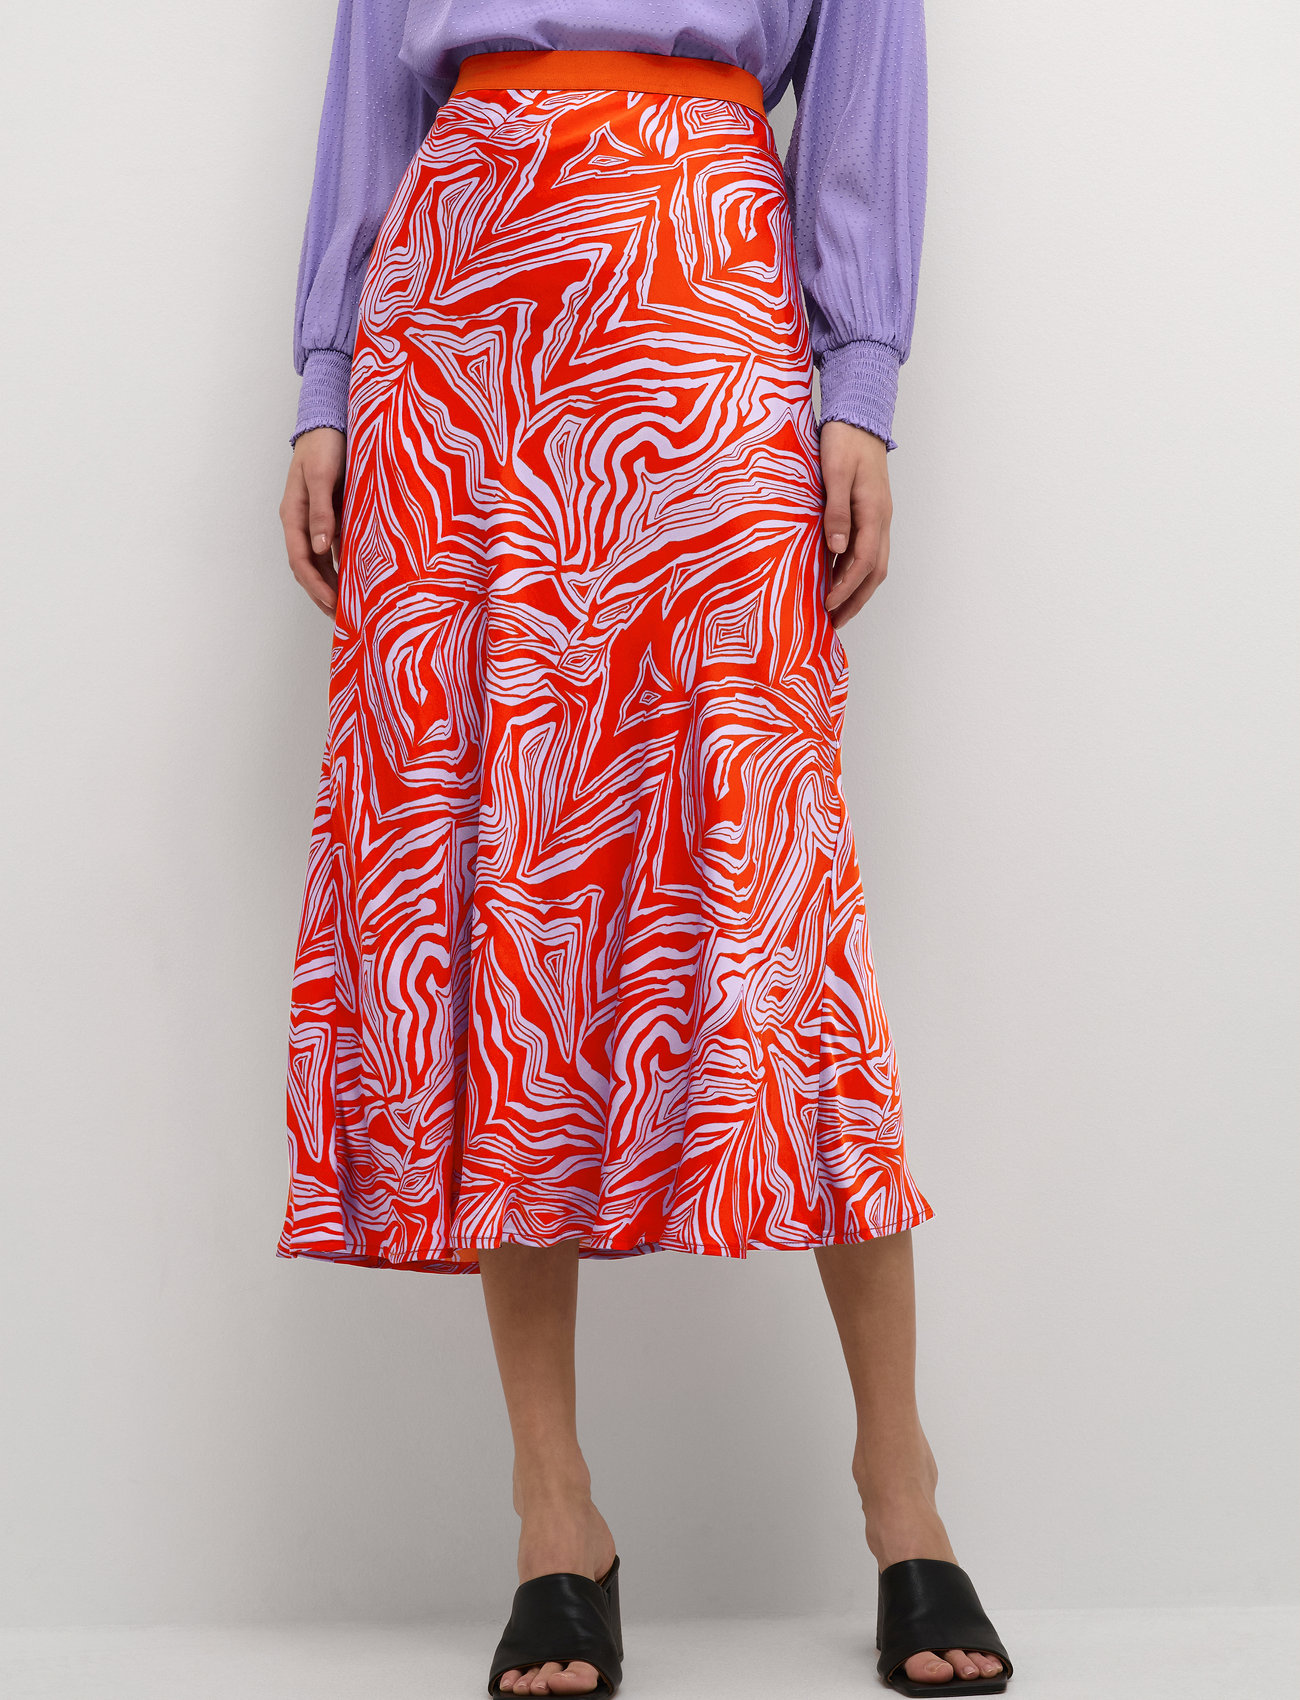 Culture - CUvilma Skirt - satinröcke - orange - 0